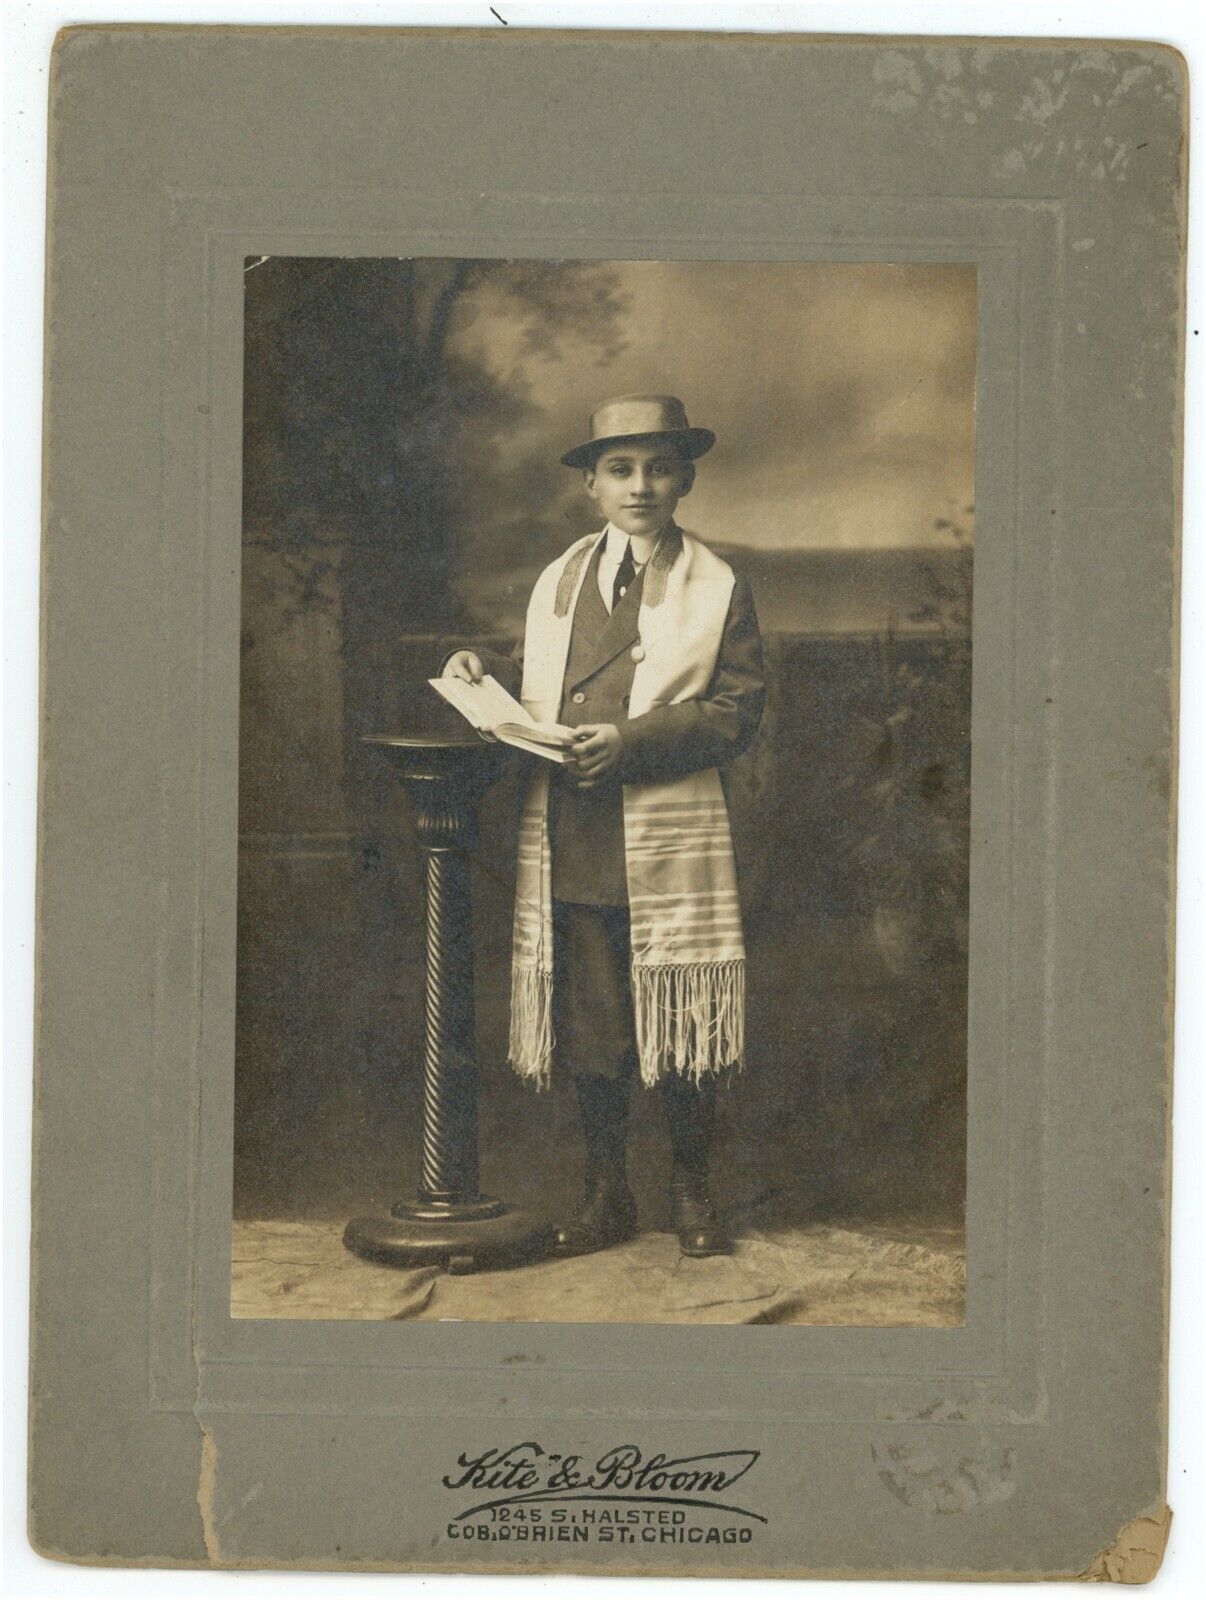 CIRCA 1890'S Large Rare CABINET CARD Jewish Boy Bar Mitzvah Kite & Bloom Chicago